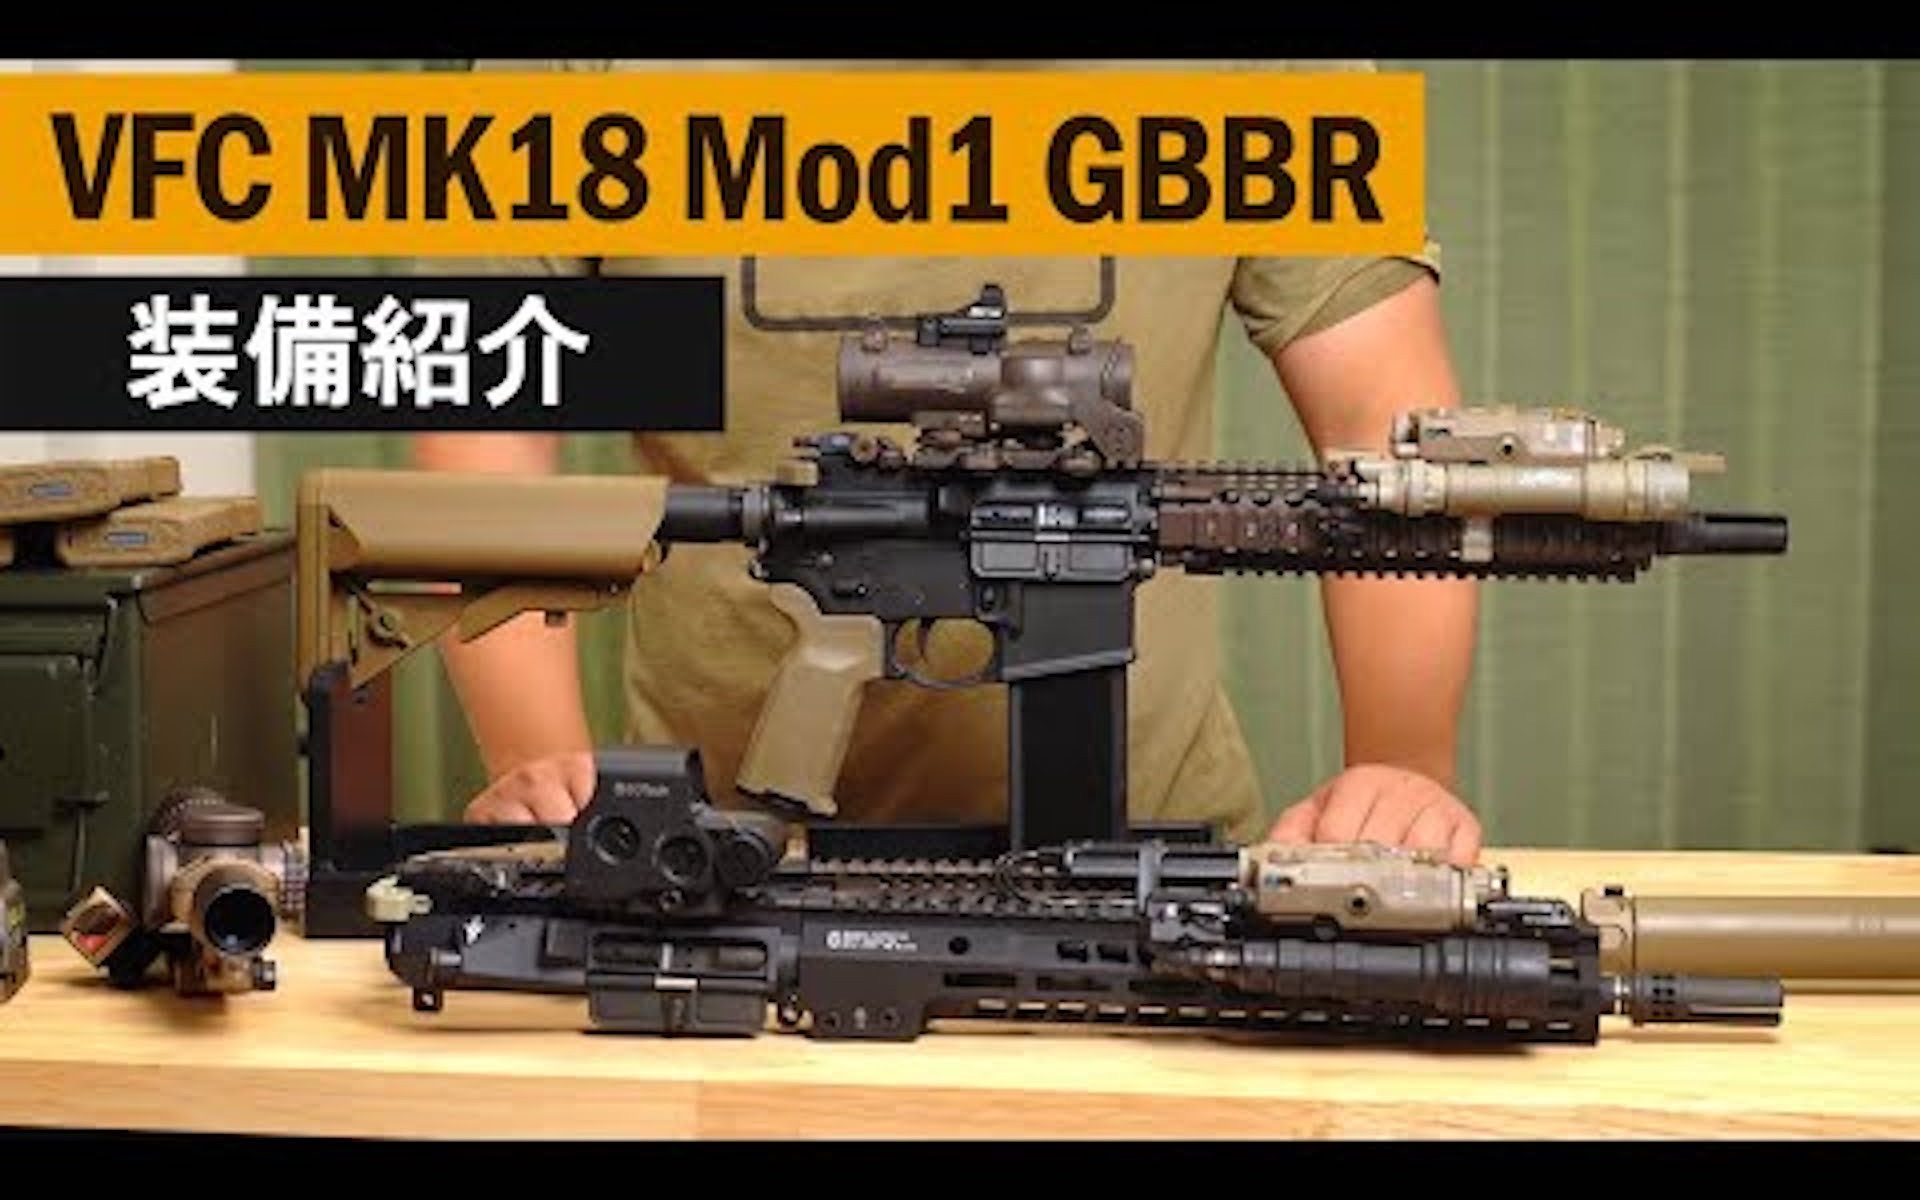 mk18mod1军版图片